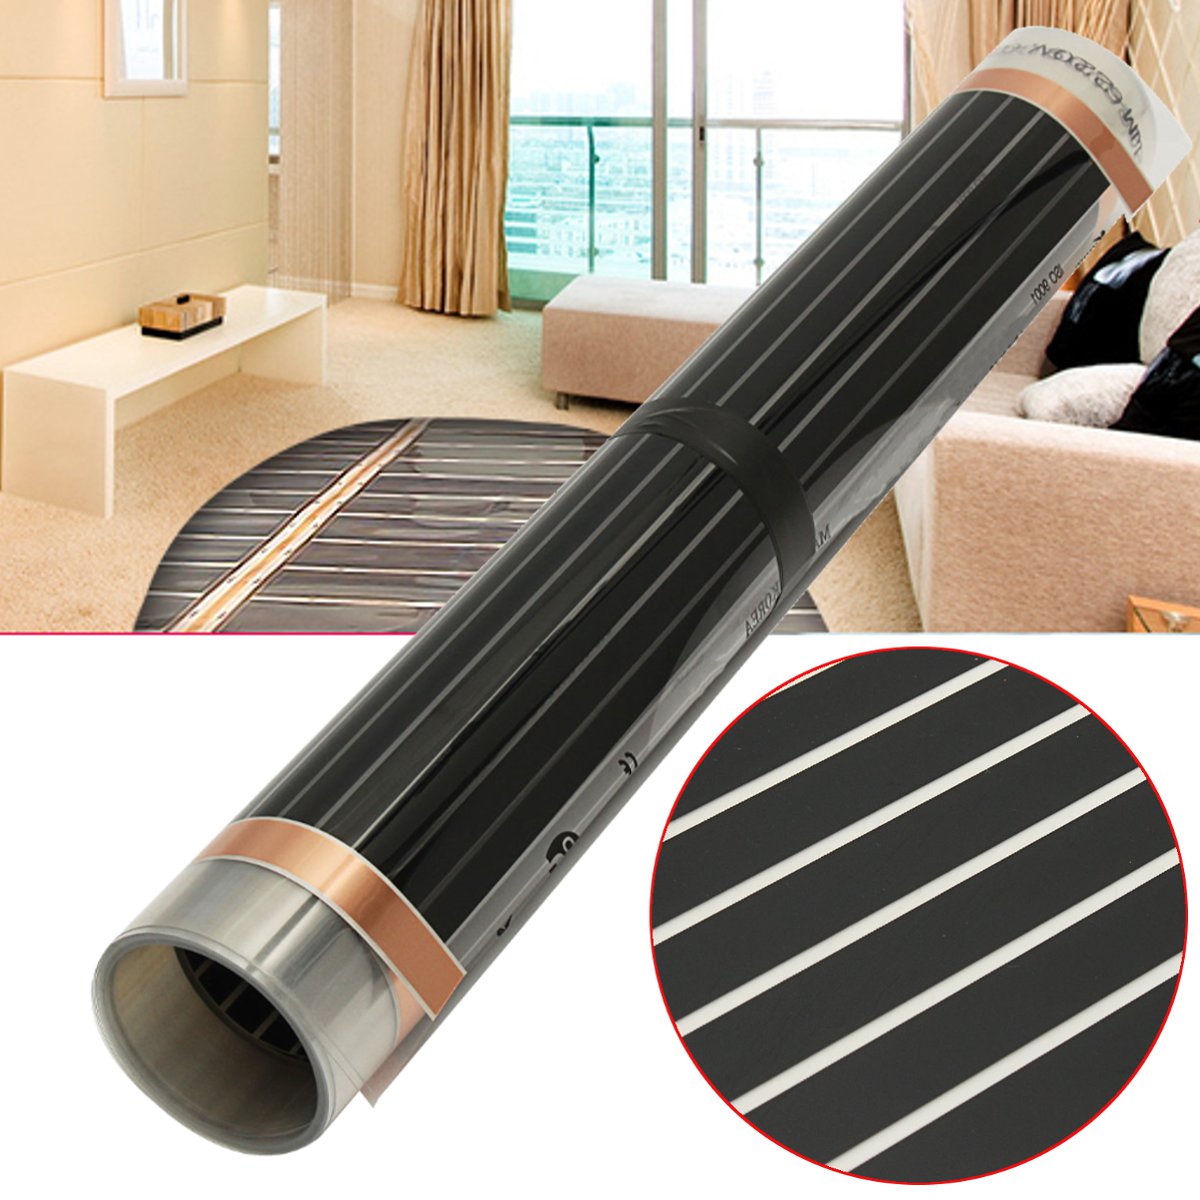 AC 220V Underfloor Infrared Heater Electric Floor Heating Film Floor Warmer Warm Mat Laminate / Solid Flooring Heating System